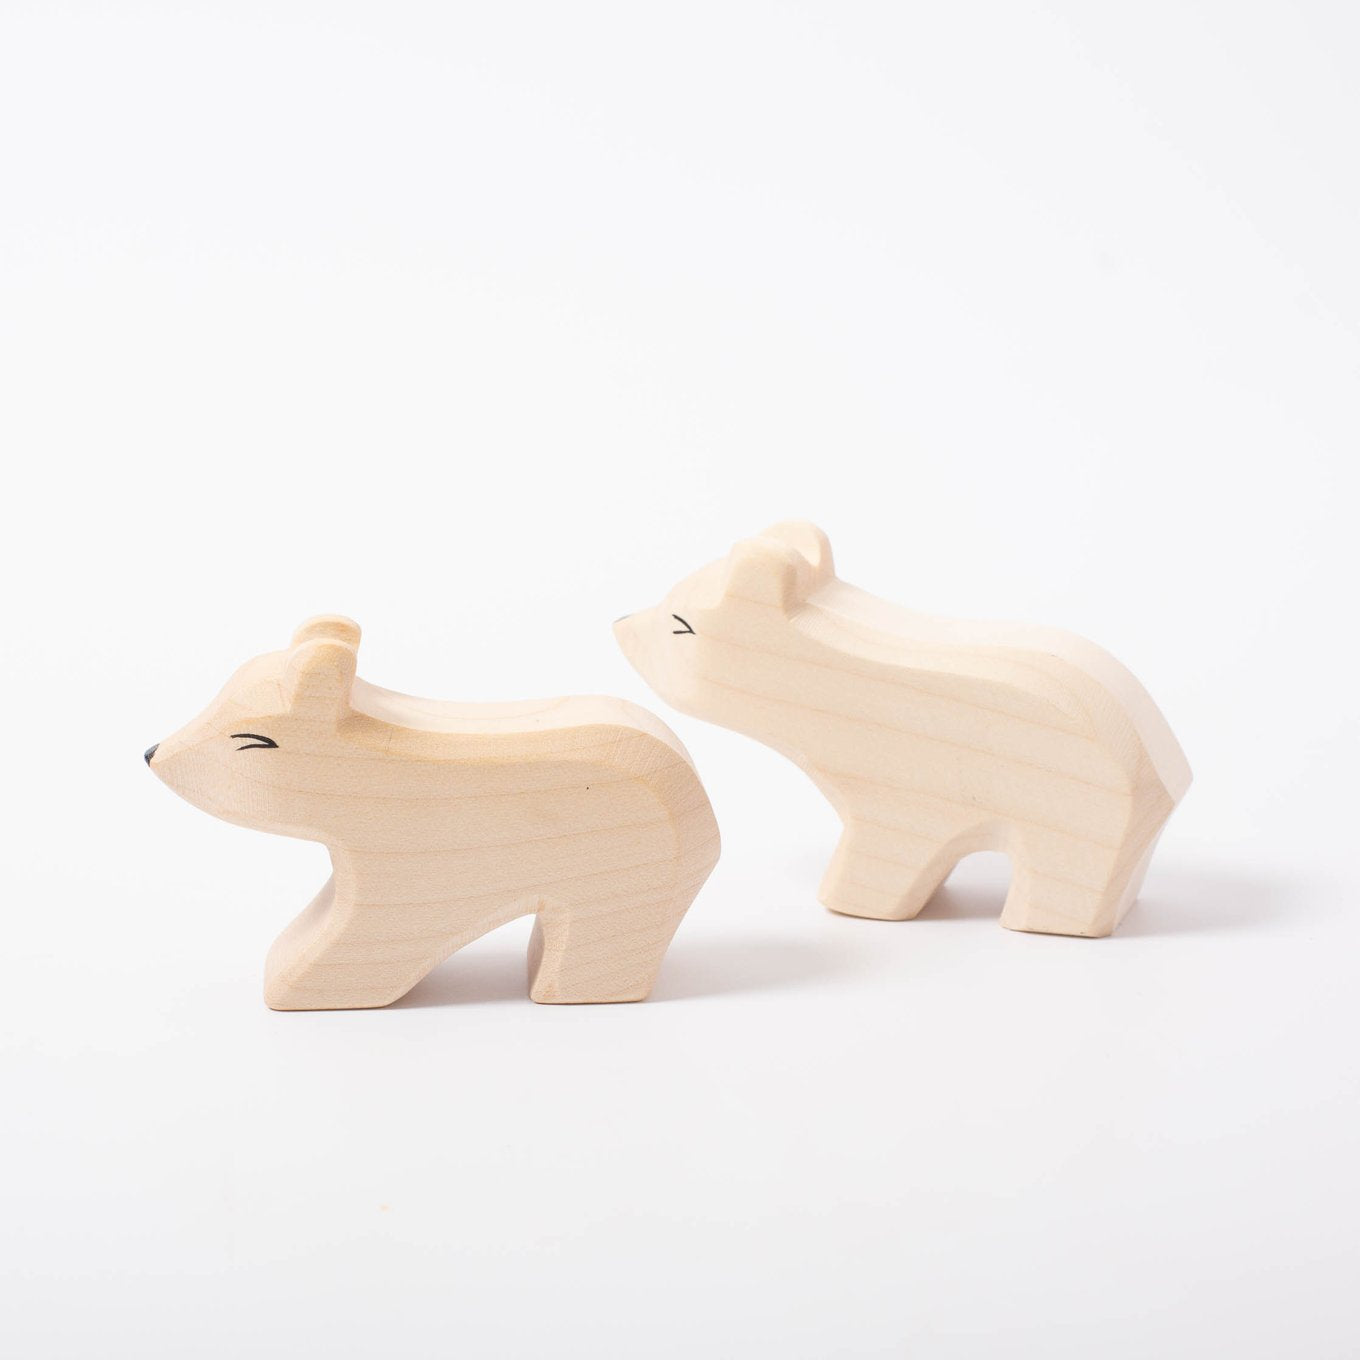 Small wooden polar bears